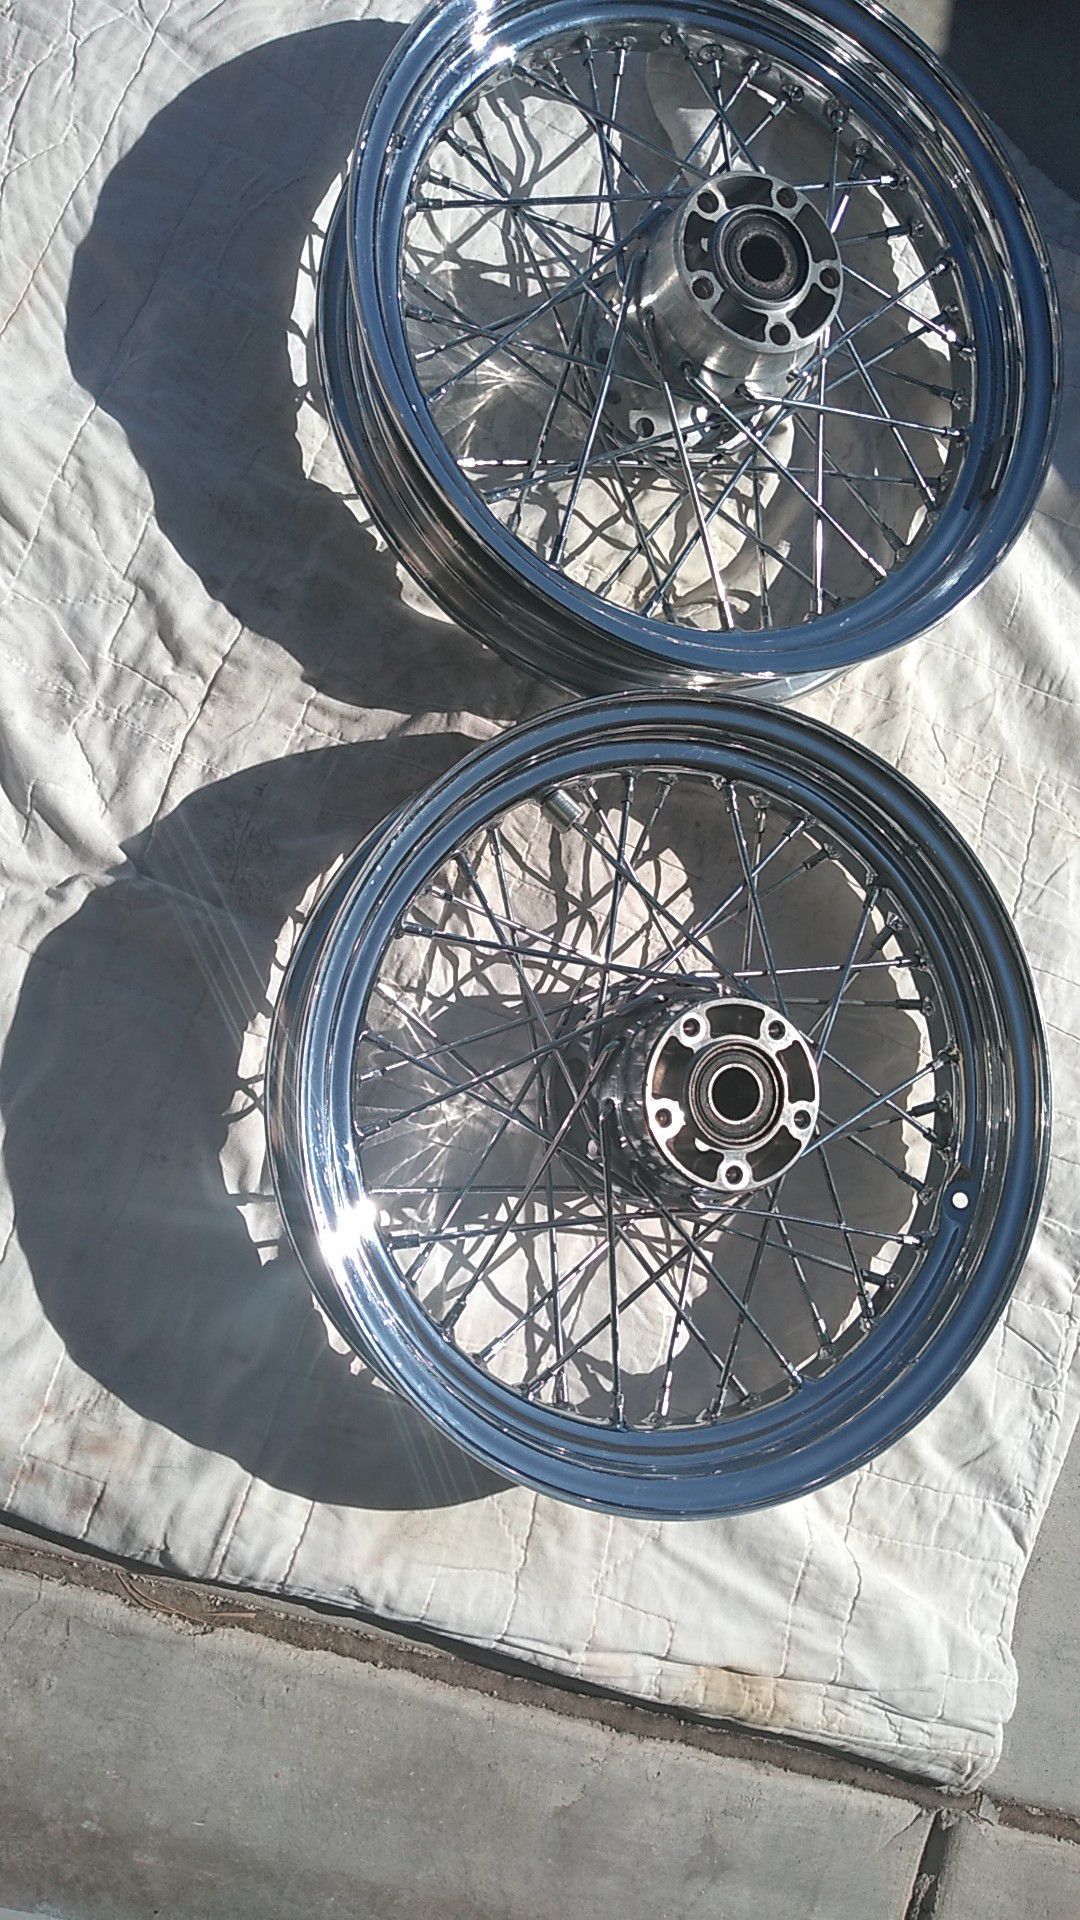 Harley-Davidson chrome spoke wheels